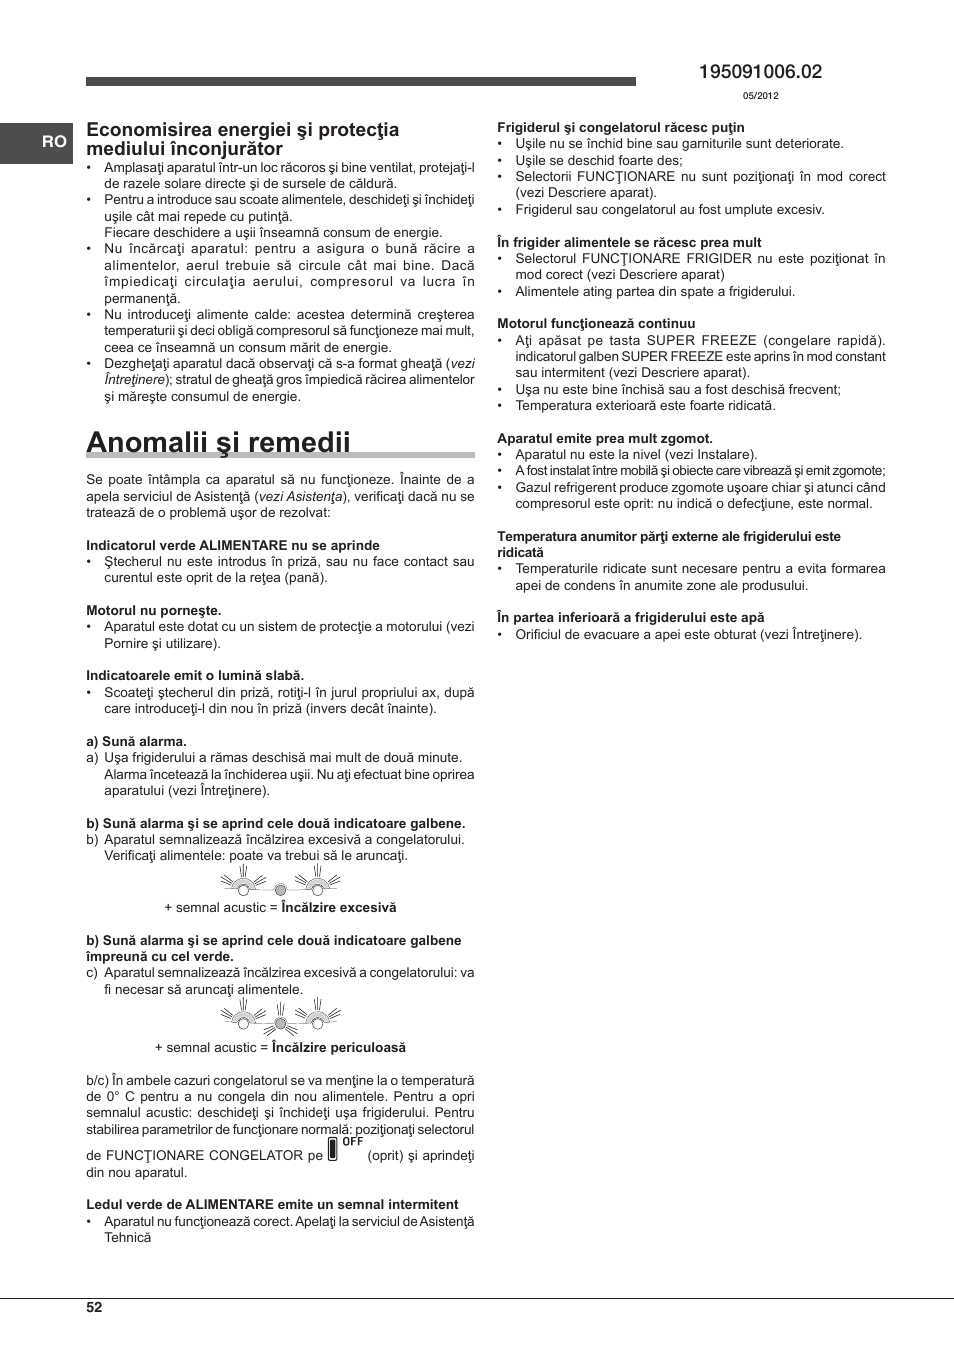 Anomalii şi remedii | Hotpoint Ariston SBLxxxxNF User Manual | Page 52 / 52